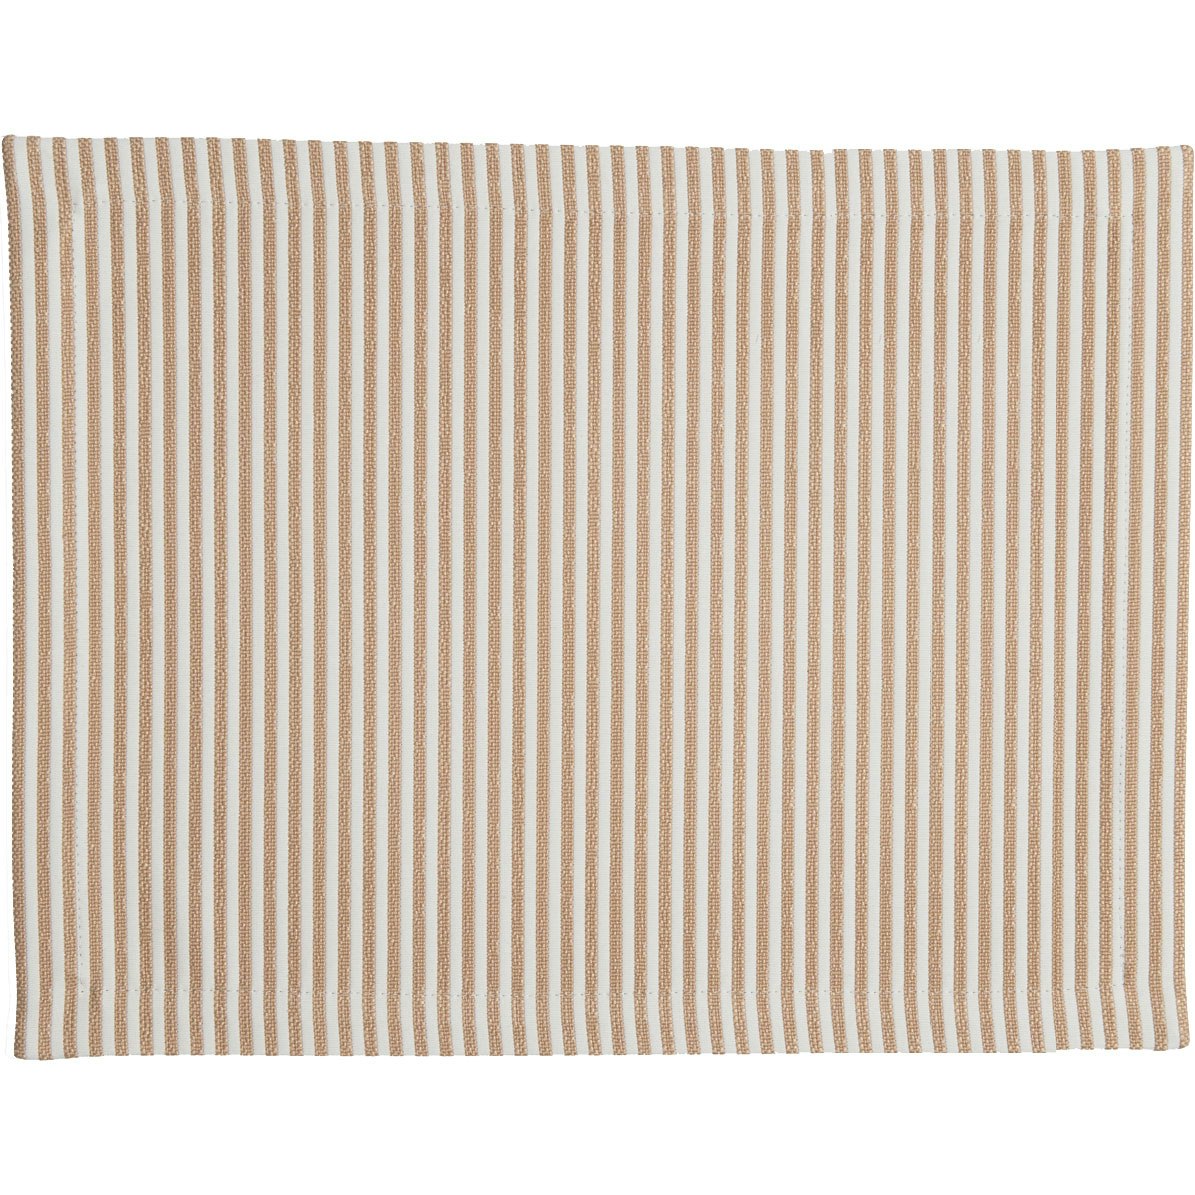 Narrow Stripe Dækkeserviet 35x45 cm, Beige